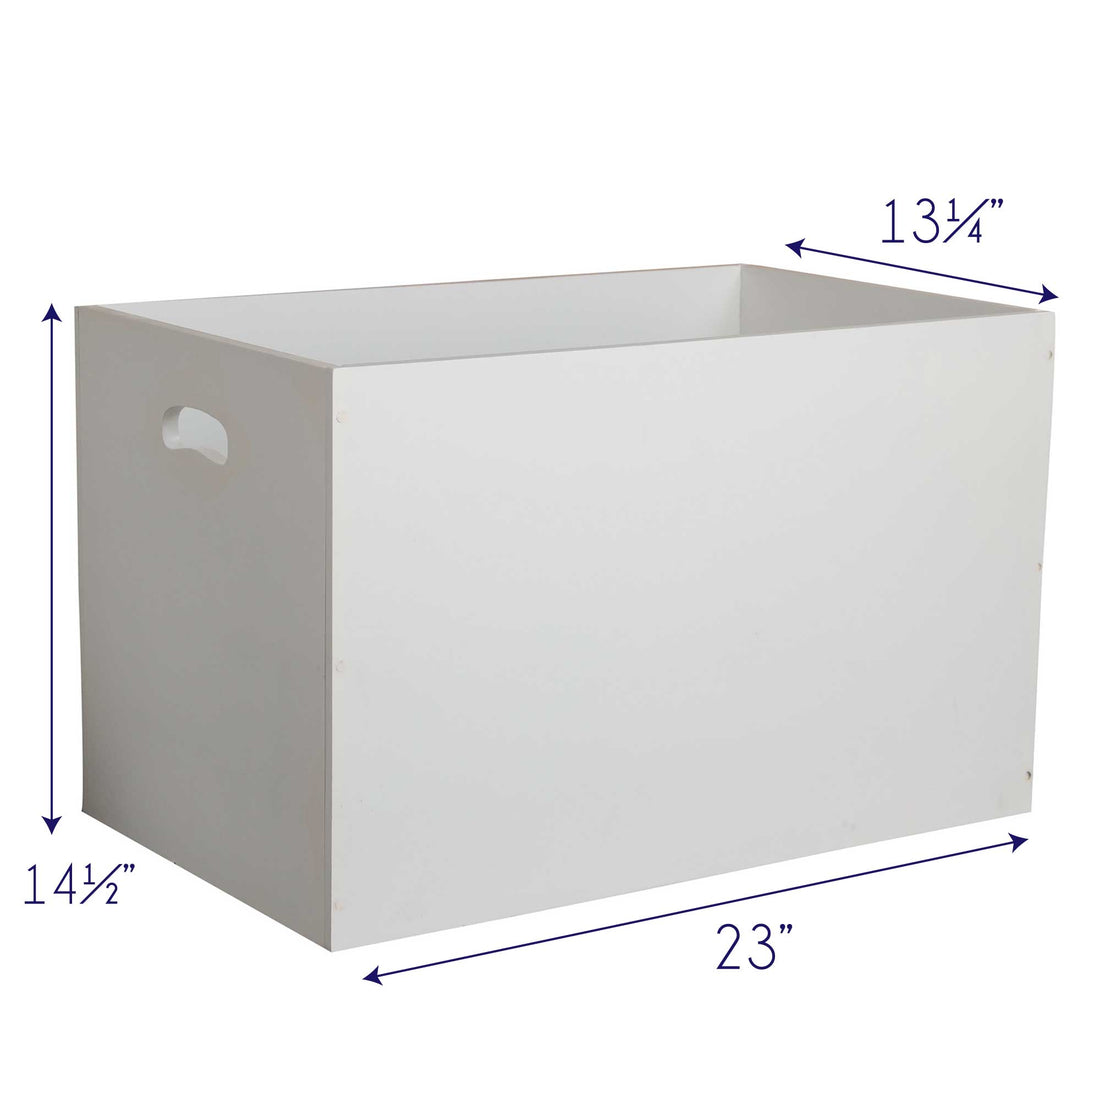 Open White Toy Box Bench with Slothie design